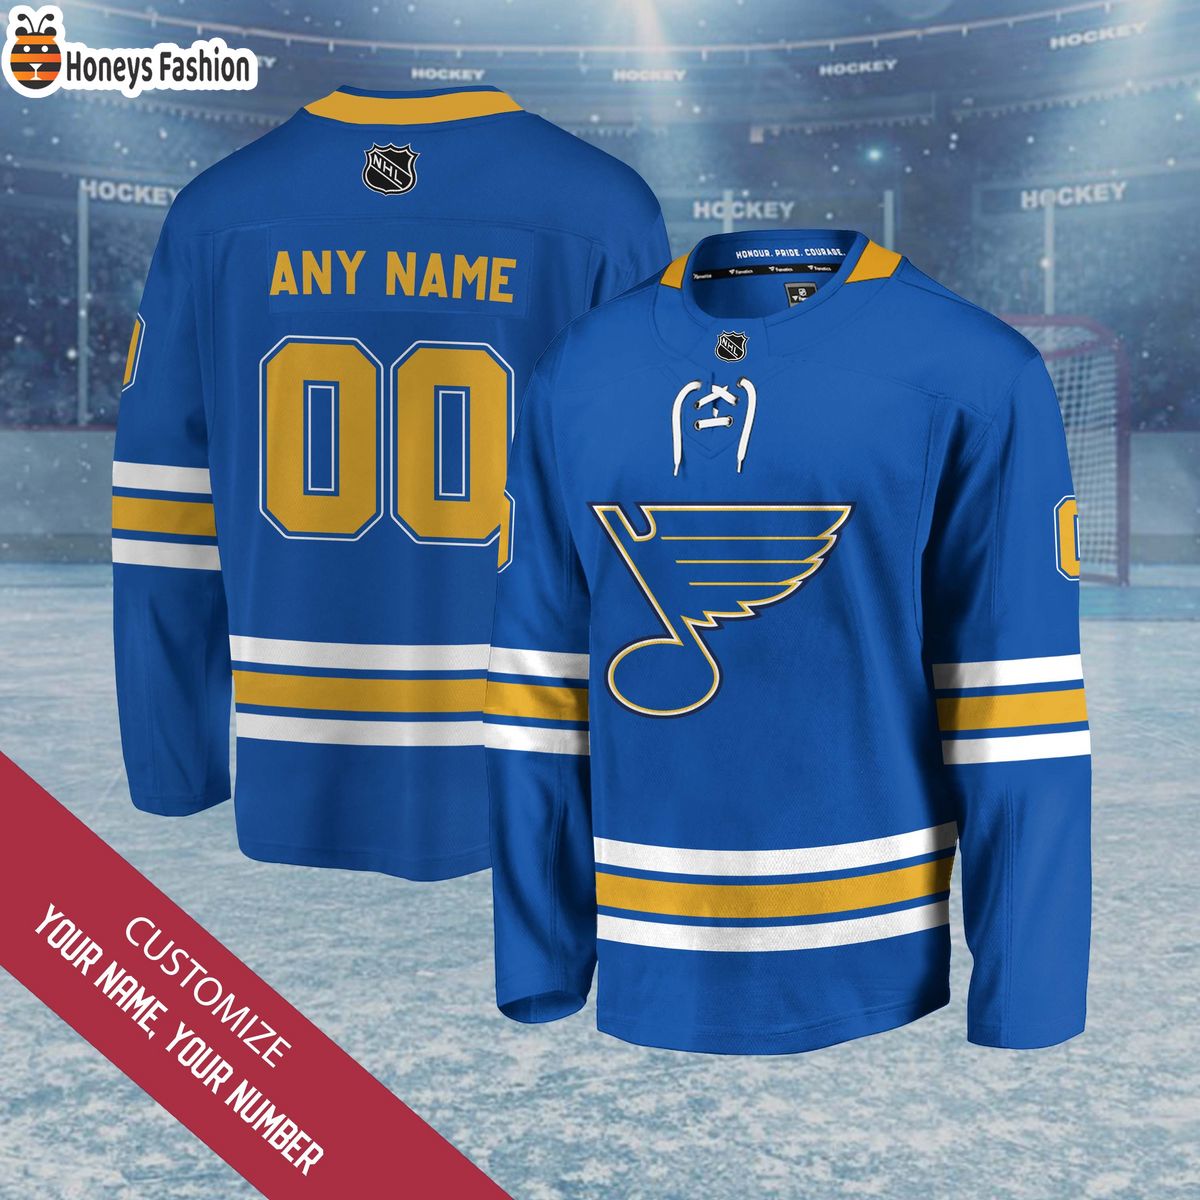 St. Louis Blues Personalized Hockey Jersey